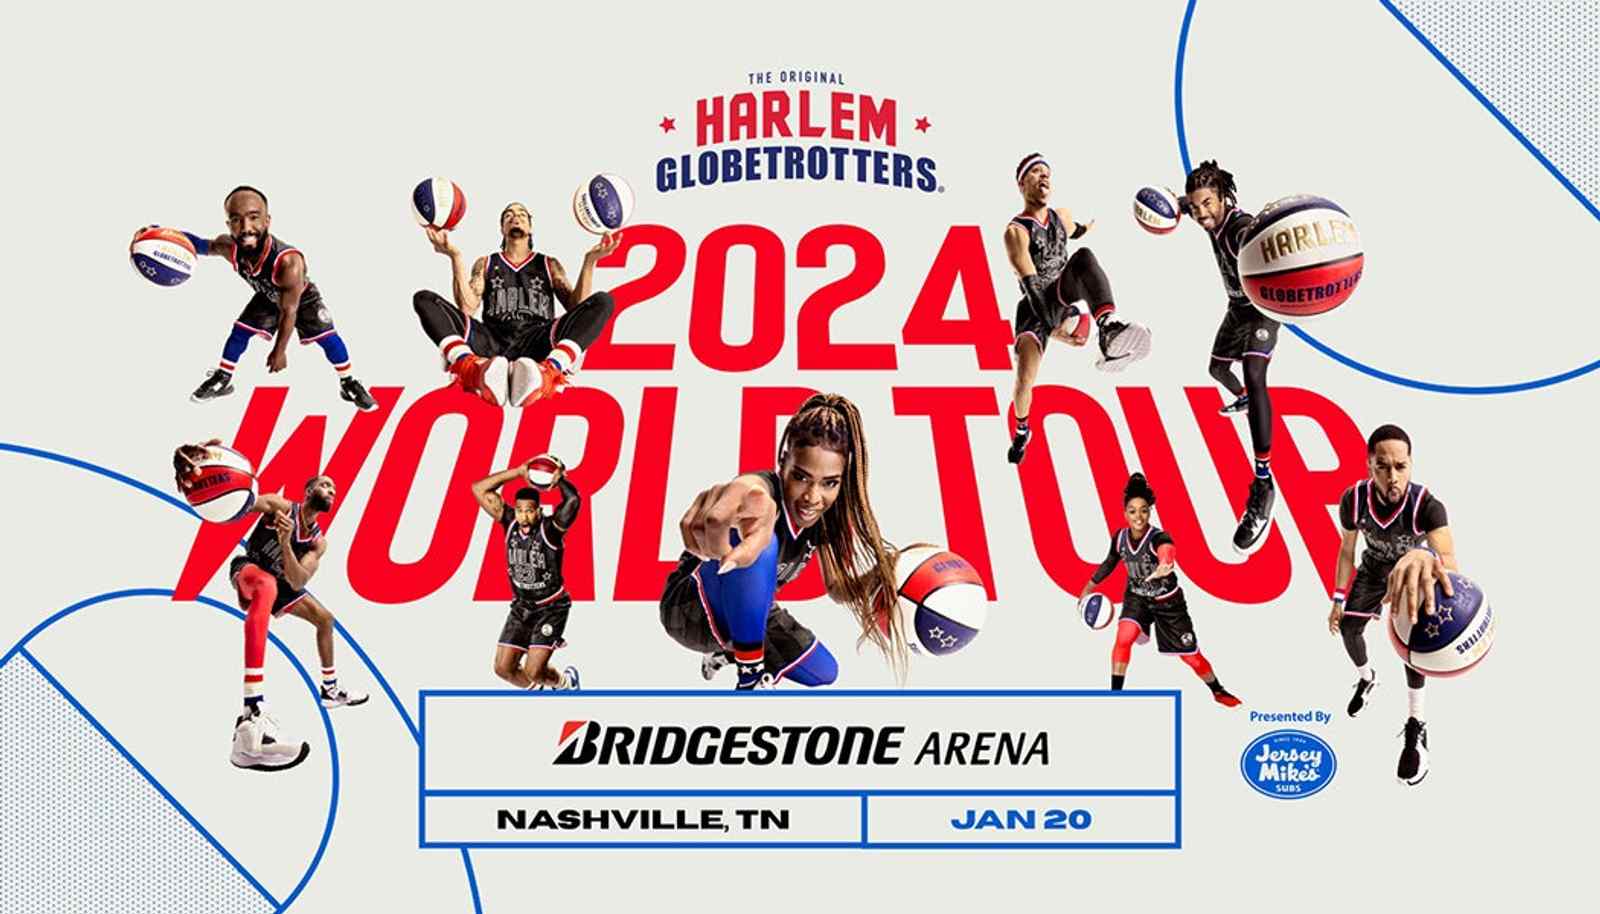 Harlem Globetrotters 2024 World Tour (2nd Showing)